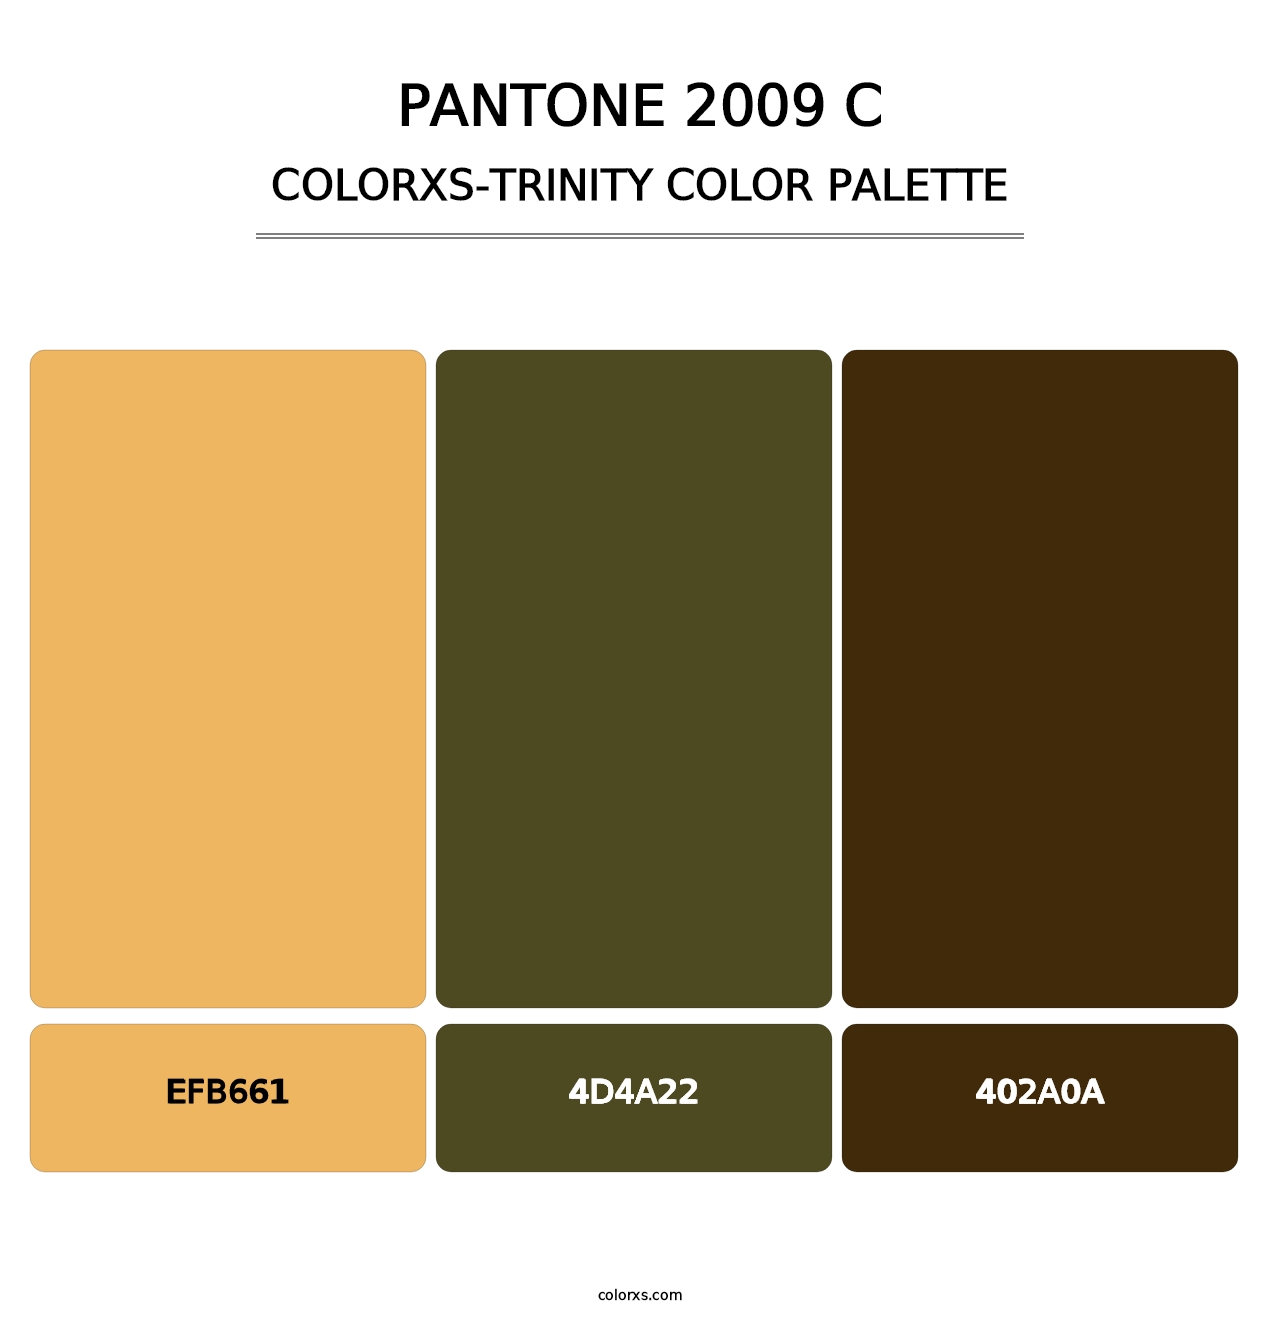 PANTONE 2009 C - Colorxs Trinity Palette